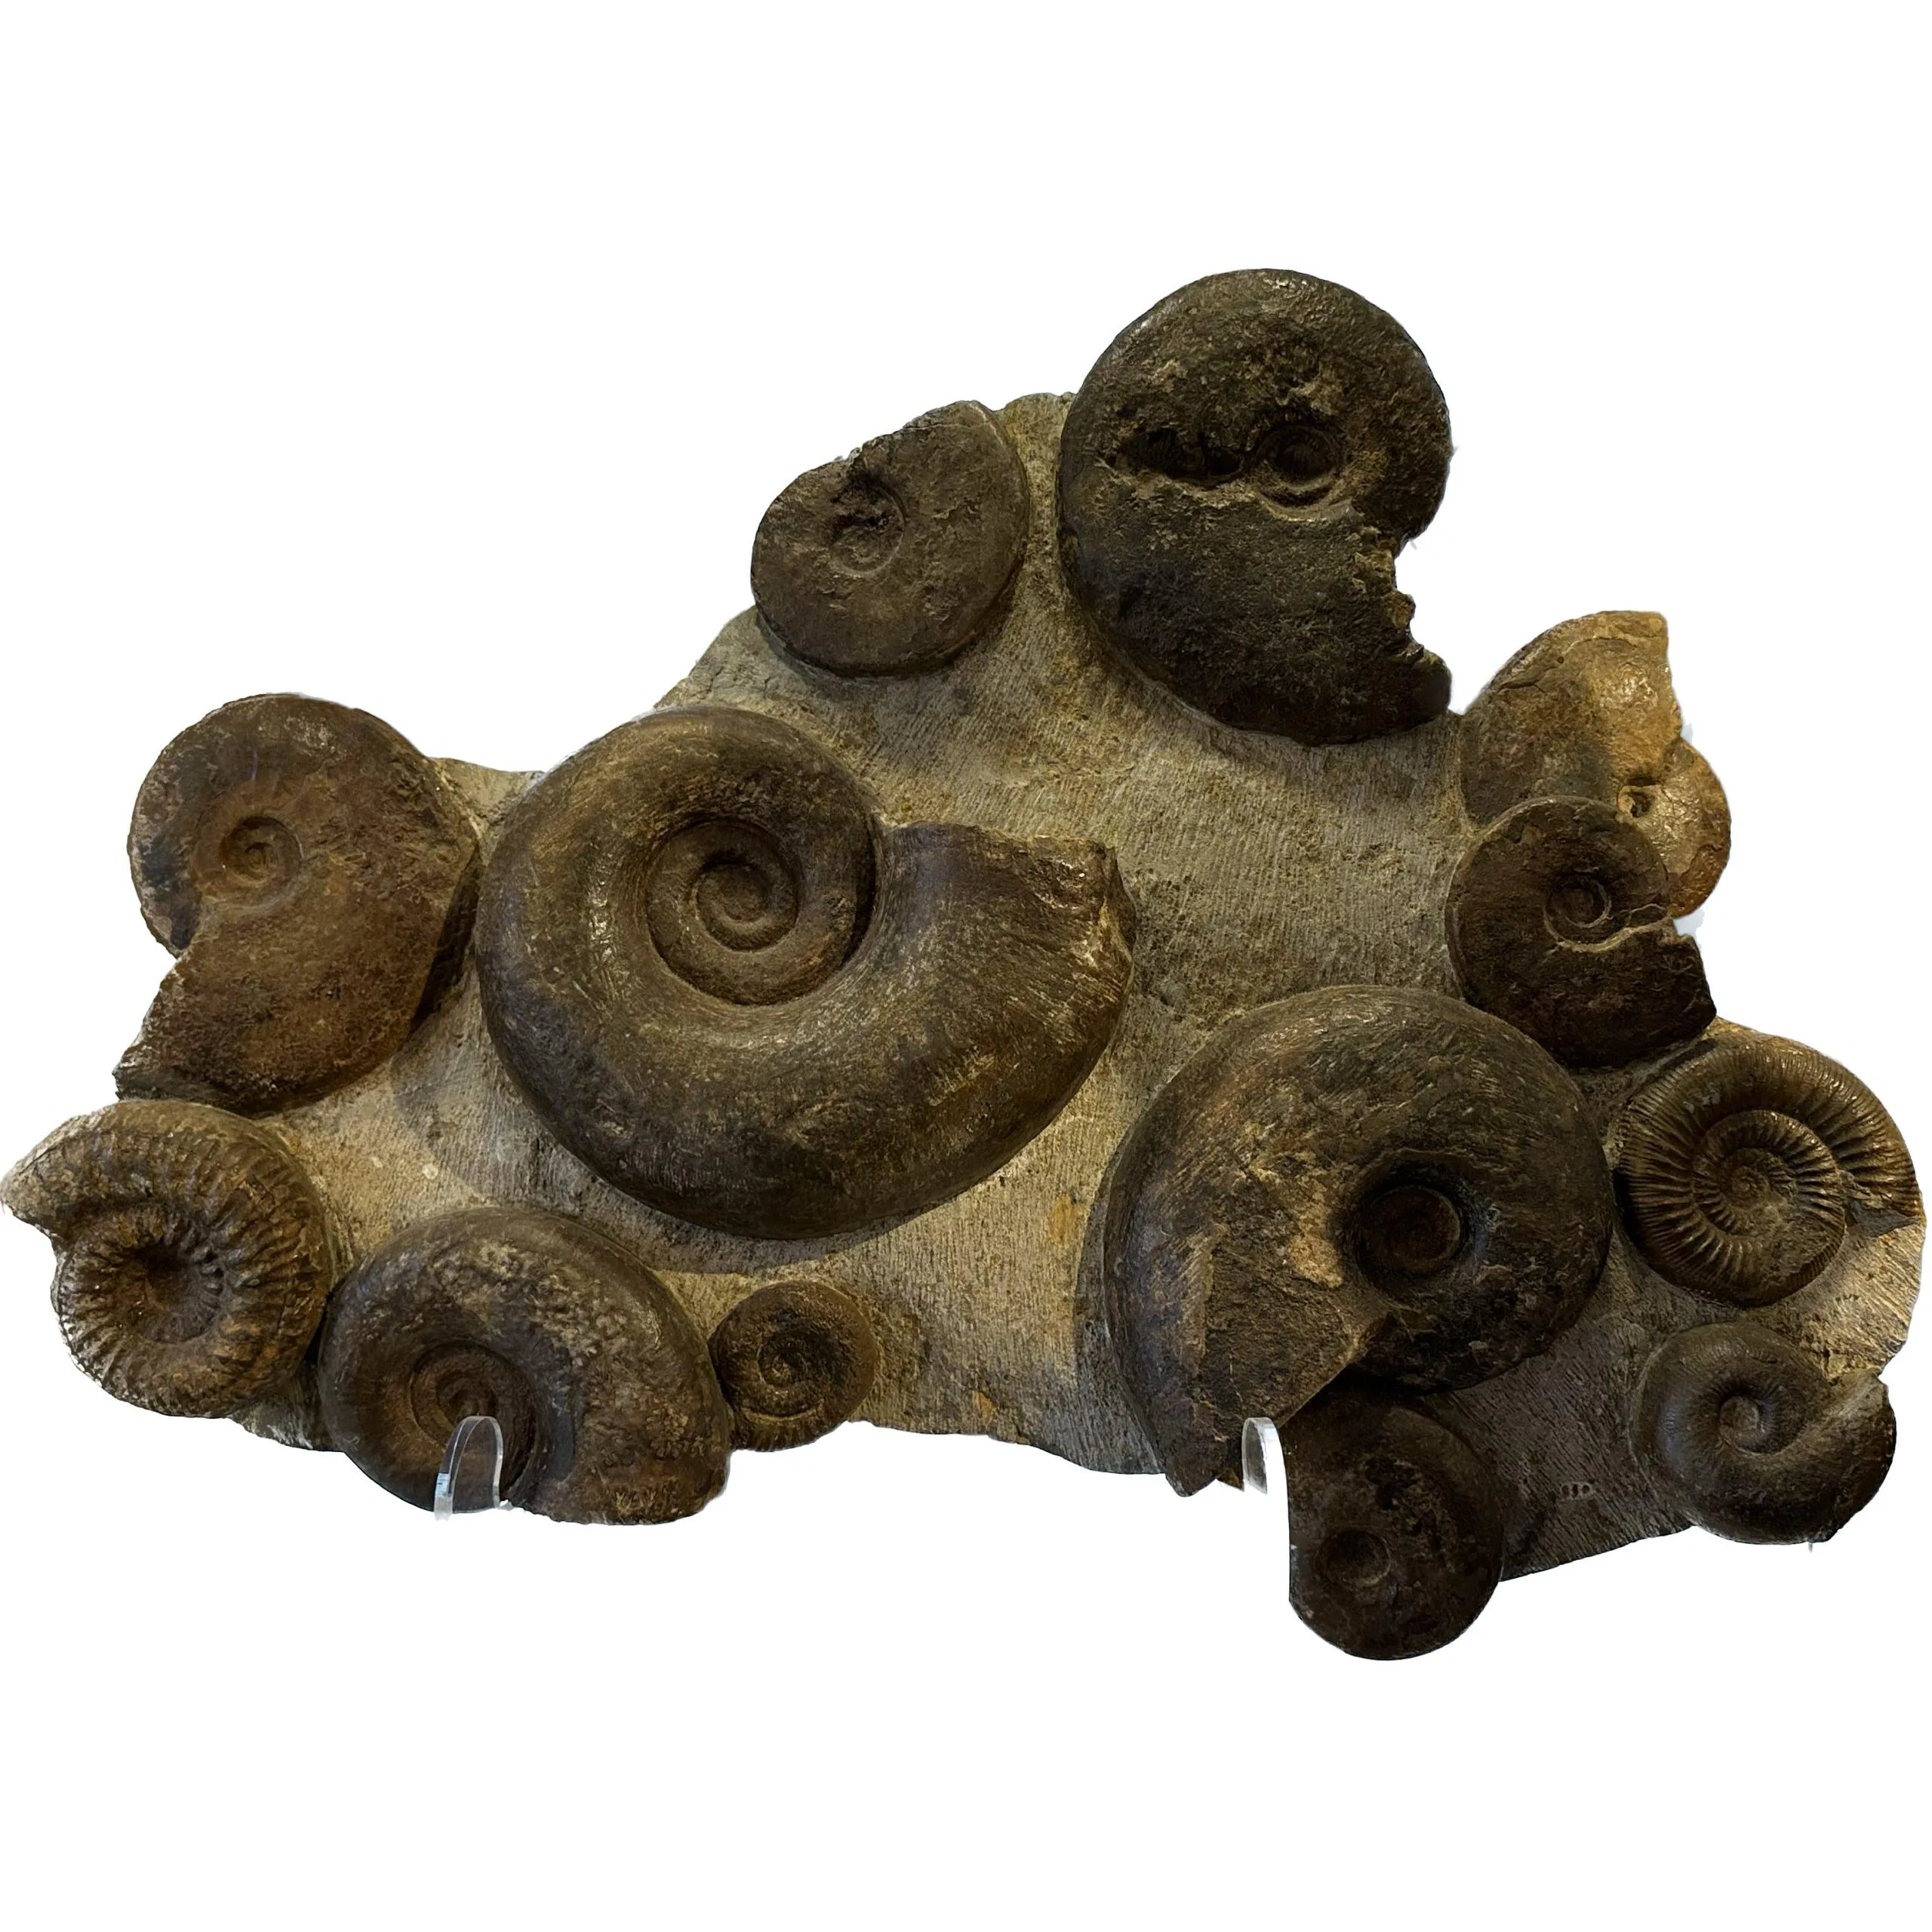 Huge Fossil ammonite display, multiple species Prehistoric Online